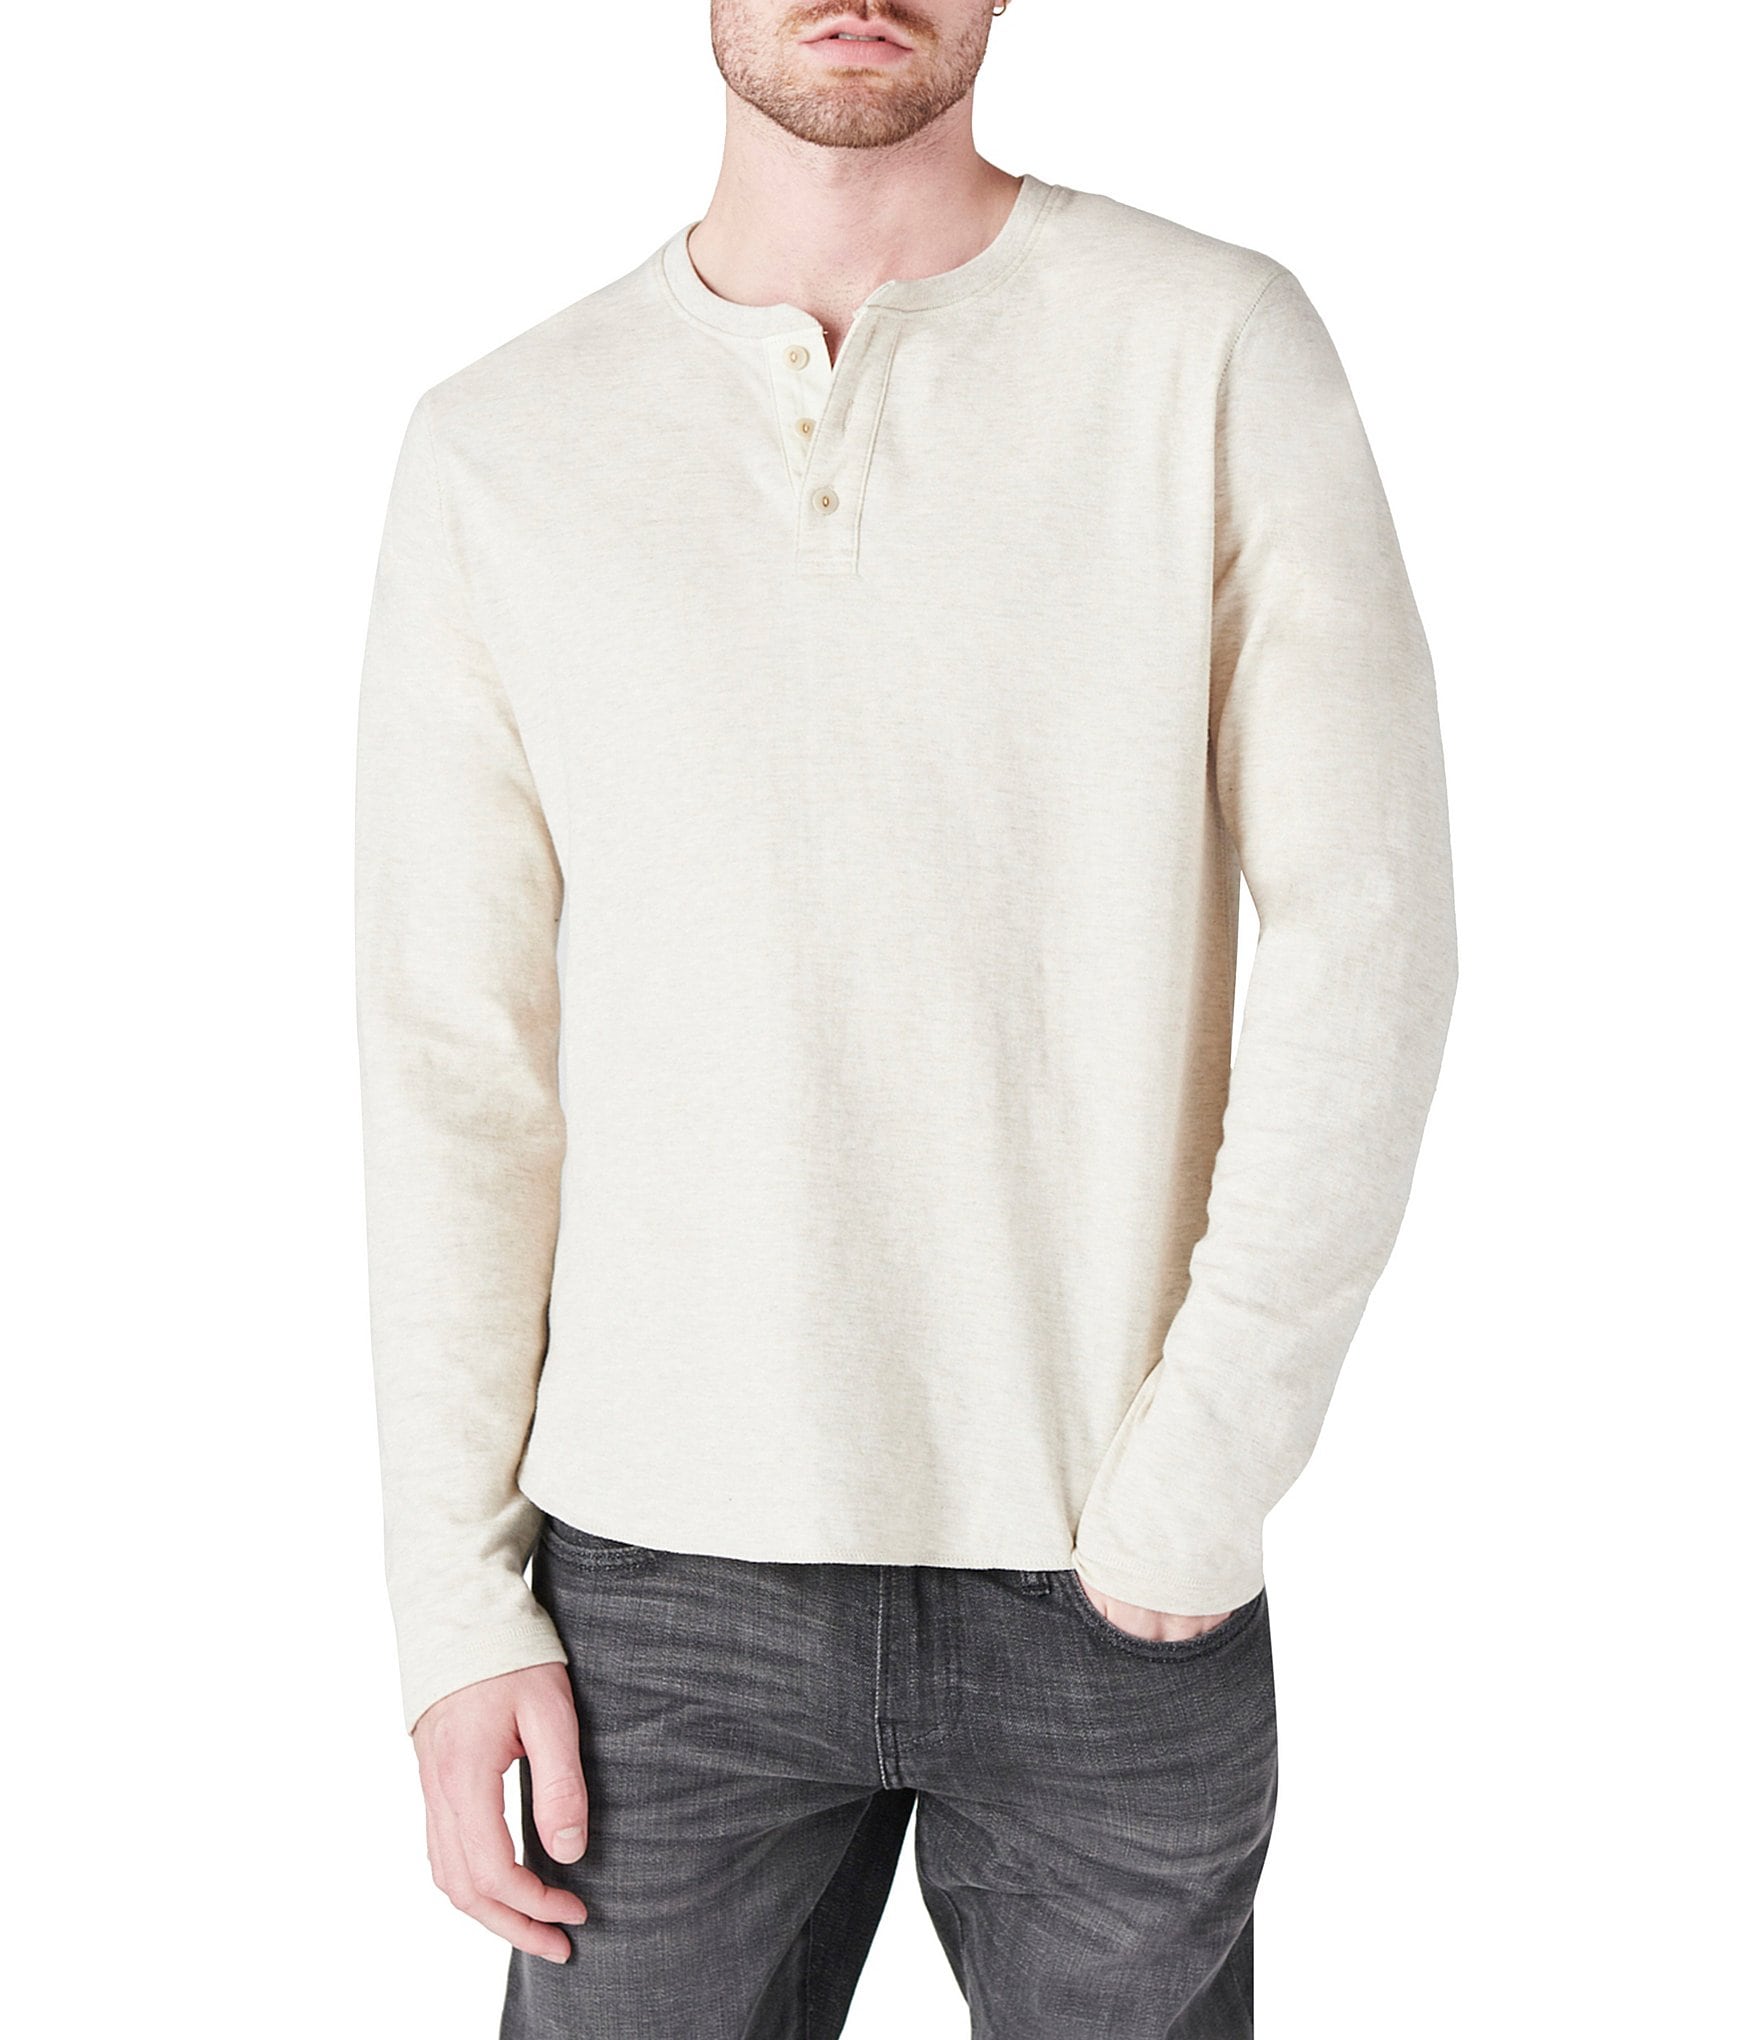 Premium Denim Raglan Long-Sleeve Waffle Knit T-Shirt